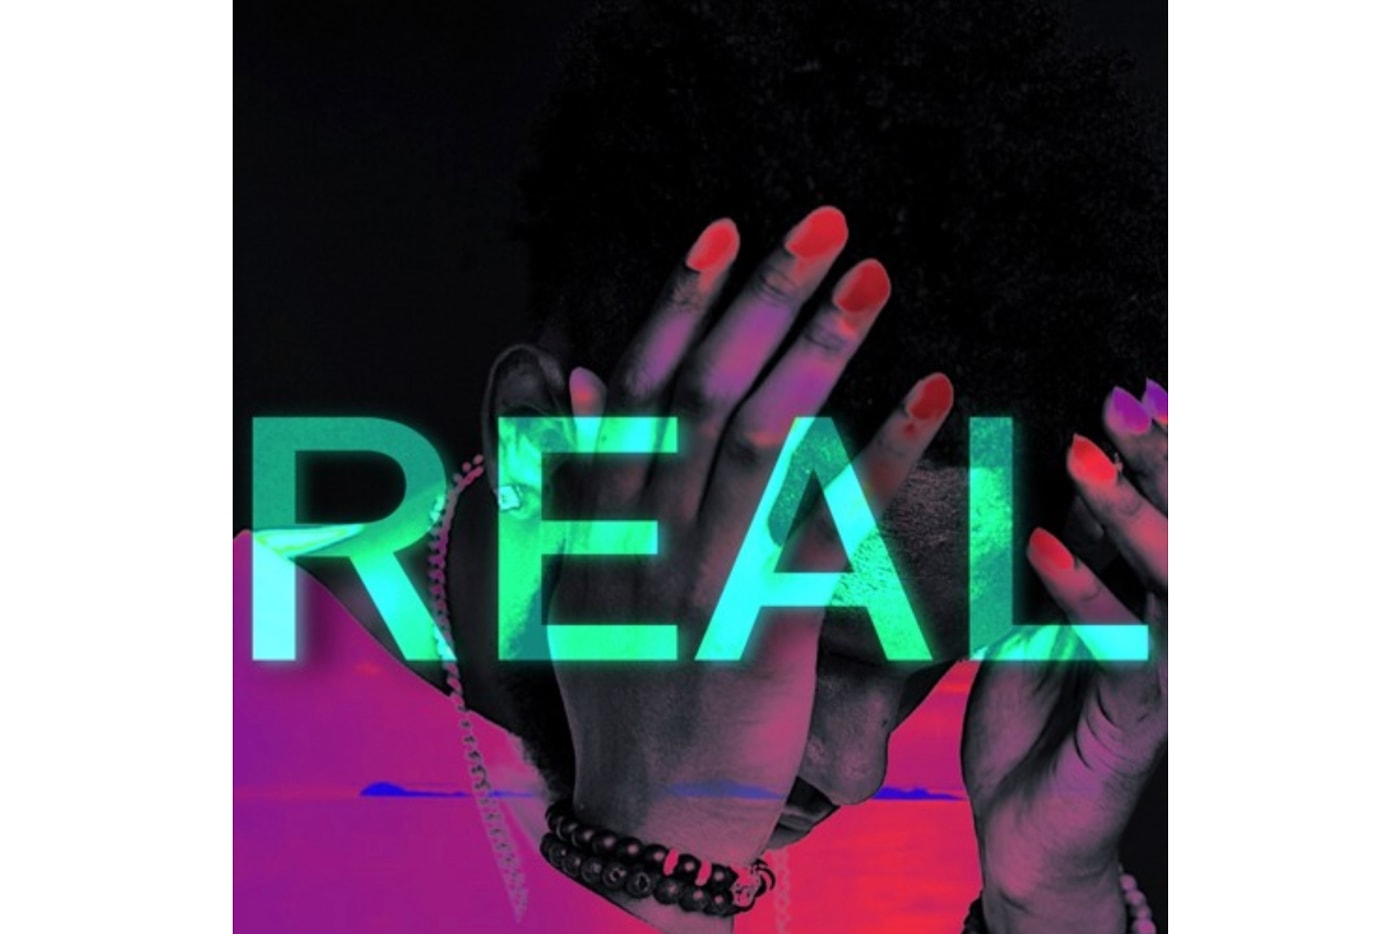 James Japan HeadBanga Real Album Leak Single Music Video EP Mixtape Download Stream Discography 2018 Live Show Performance Tour Dates Album Review Tracklist Remix